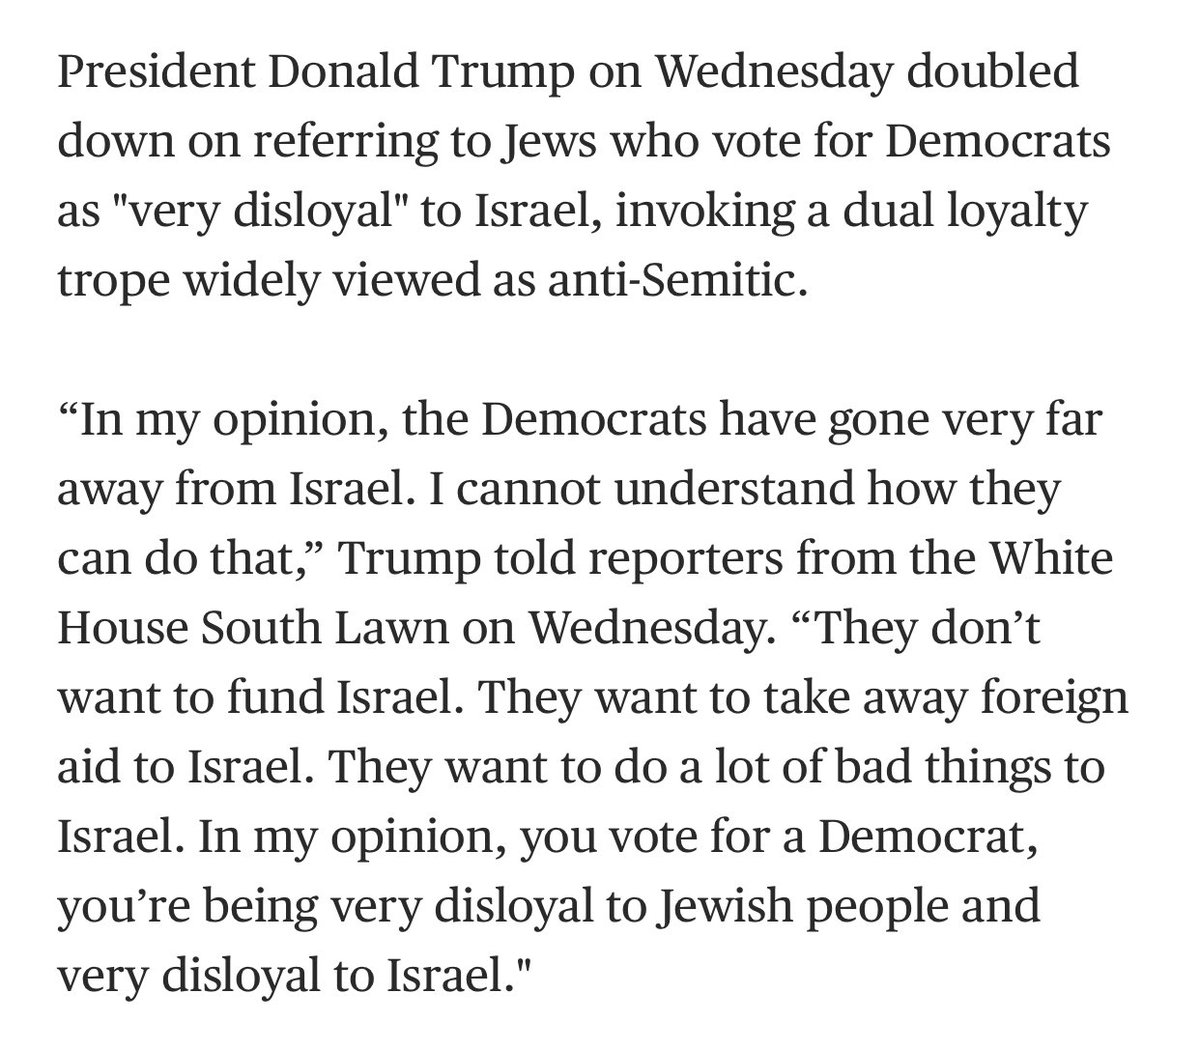 Trump openly accused American Jews that vote Democrat (the vast majority of them) of being disloyal.  https://www.nbcnews.com/politics/donald-trump/trump-doubles-down-calling-jewish-democrats-disloyal-israel-n1044861